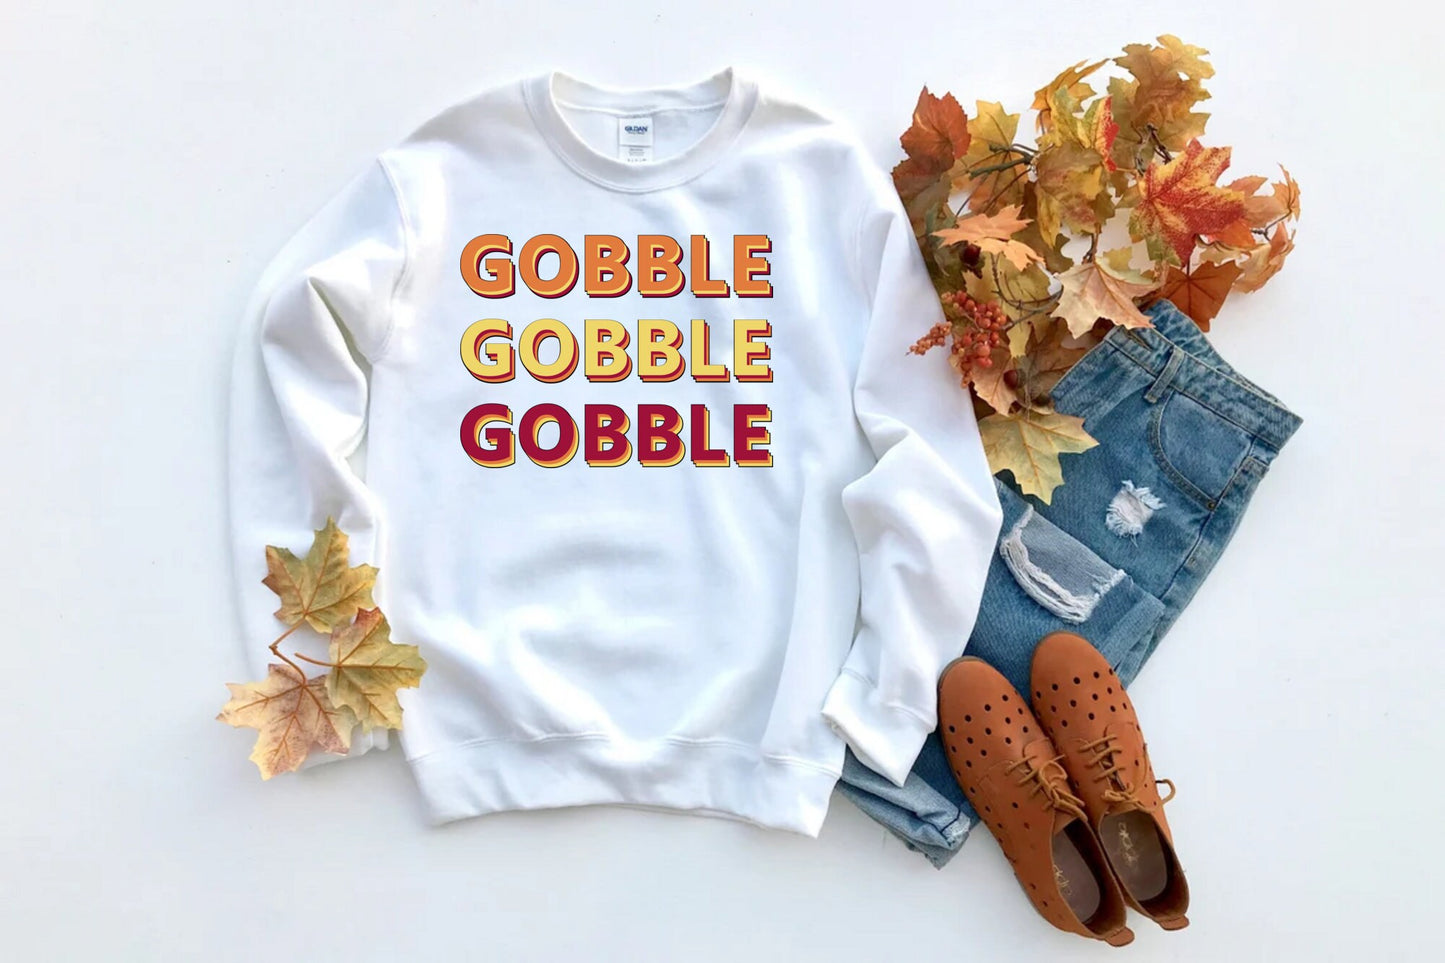 Gobble Gobble Gobble Sweatshirt, Thanksgiving, Friendsgiving Sweatshirt, Holiday Party, Friends Sweatshirt, Unisex Sweat